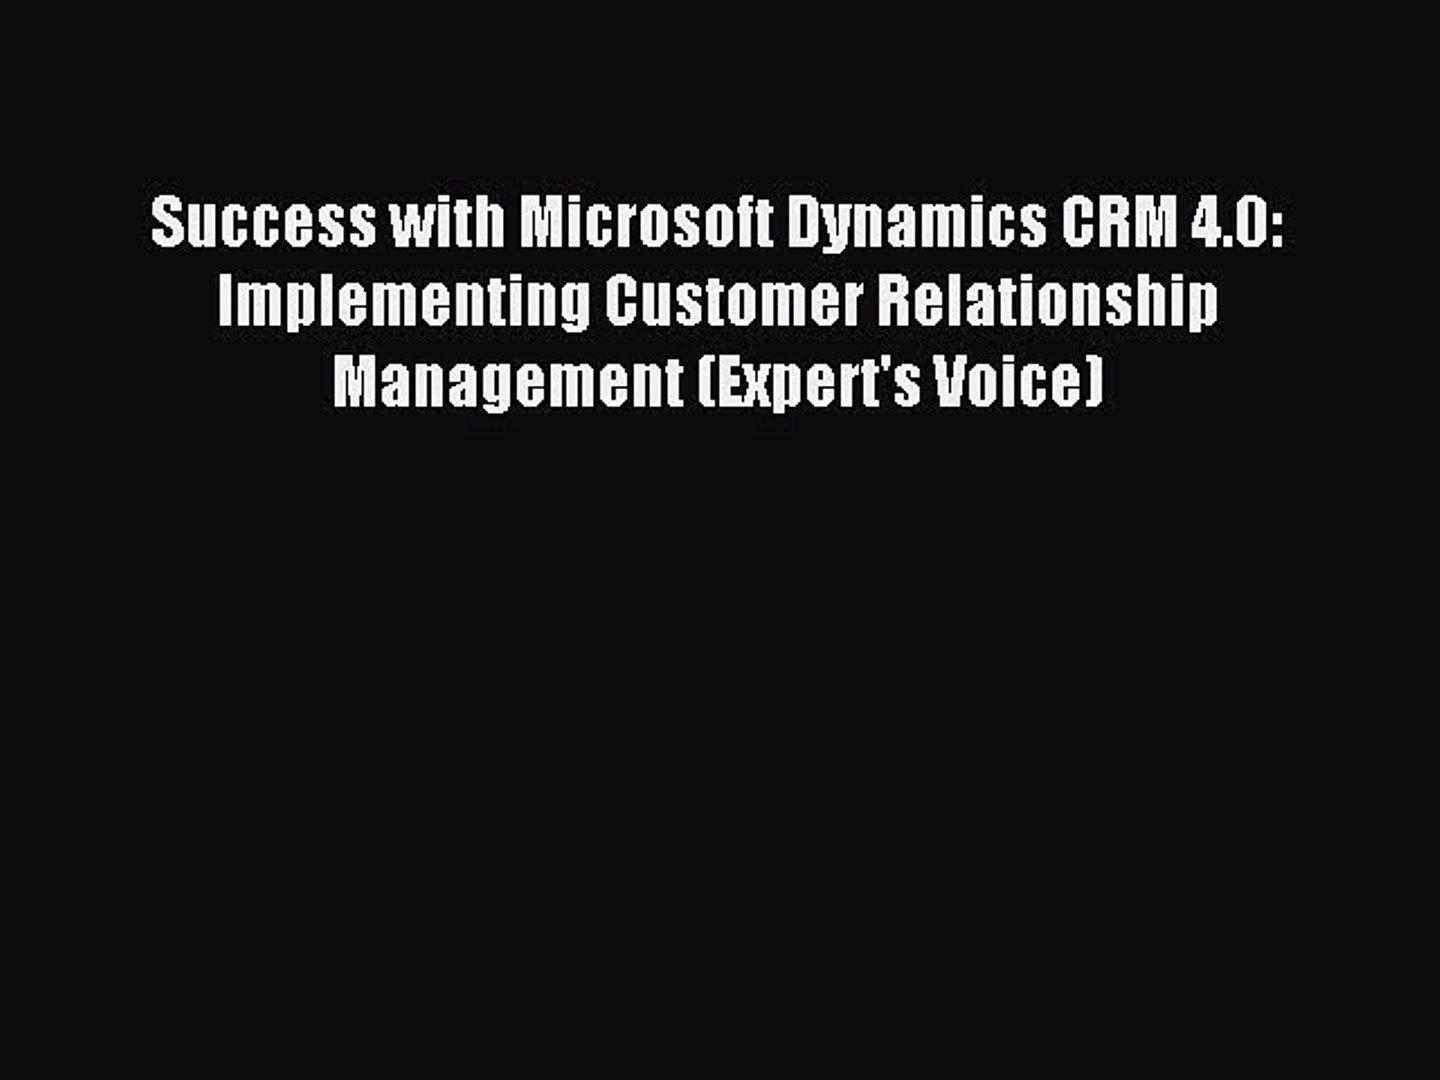 Microsoft Dynamics CRM 4 0 Logo - Read Success with Microsoft Dynamics CRM 4.0: Implementing Customer ...